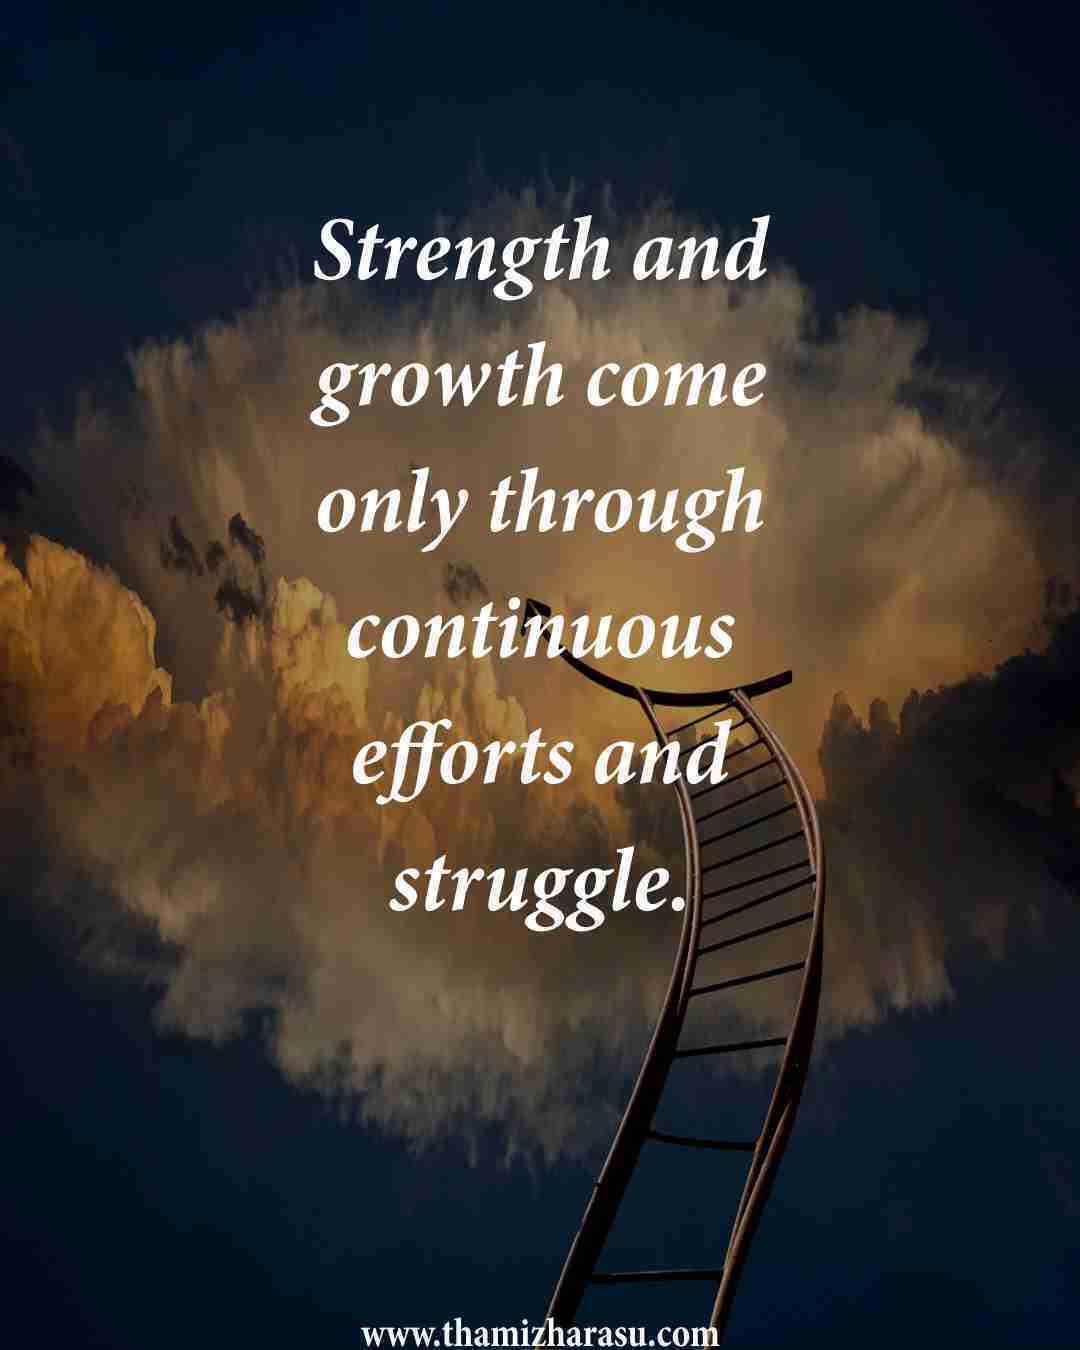 strength and growth,strength and growth quotes,strength and growth comes,motivational quotes,motivational,motivation,inspirational,inspiration,success,goals,leadership,life,change,positive,happiness,new beginning,habit